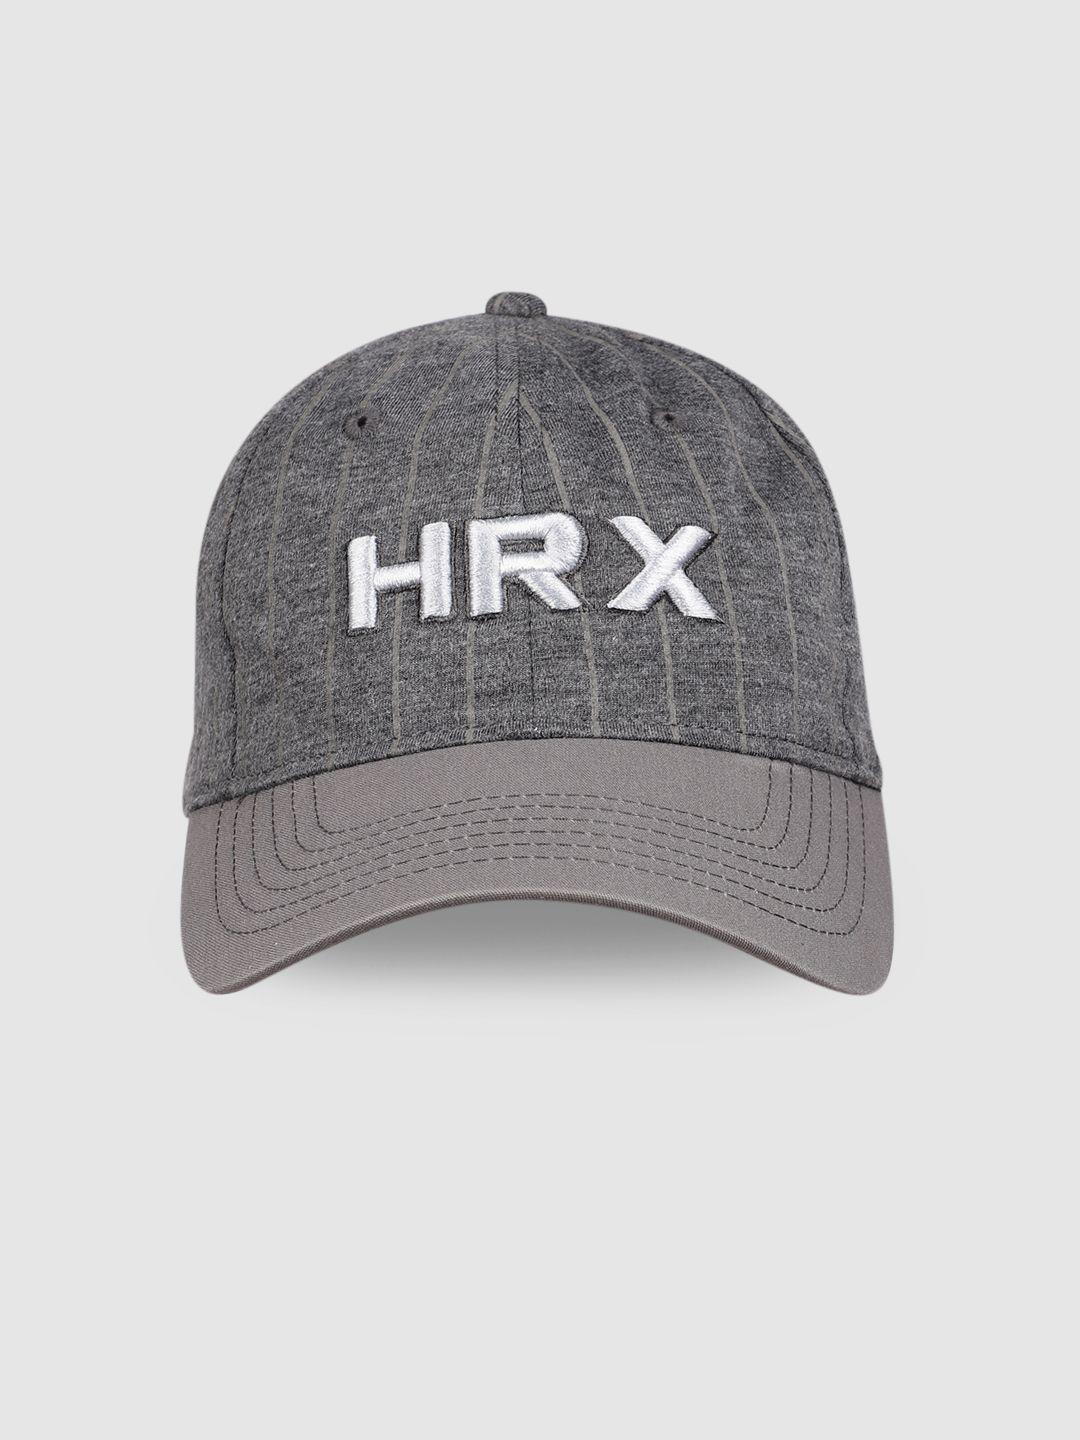 hrx-by-hrithik-roshan-unisex-dark-grey-striped-baseball-cap-with-embroidered-detail